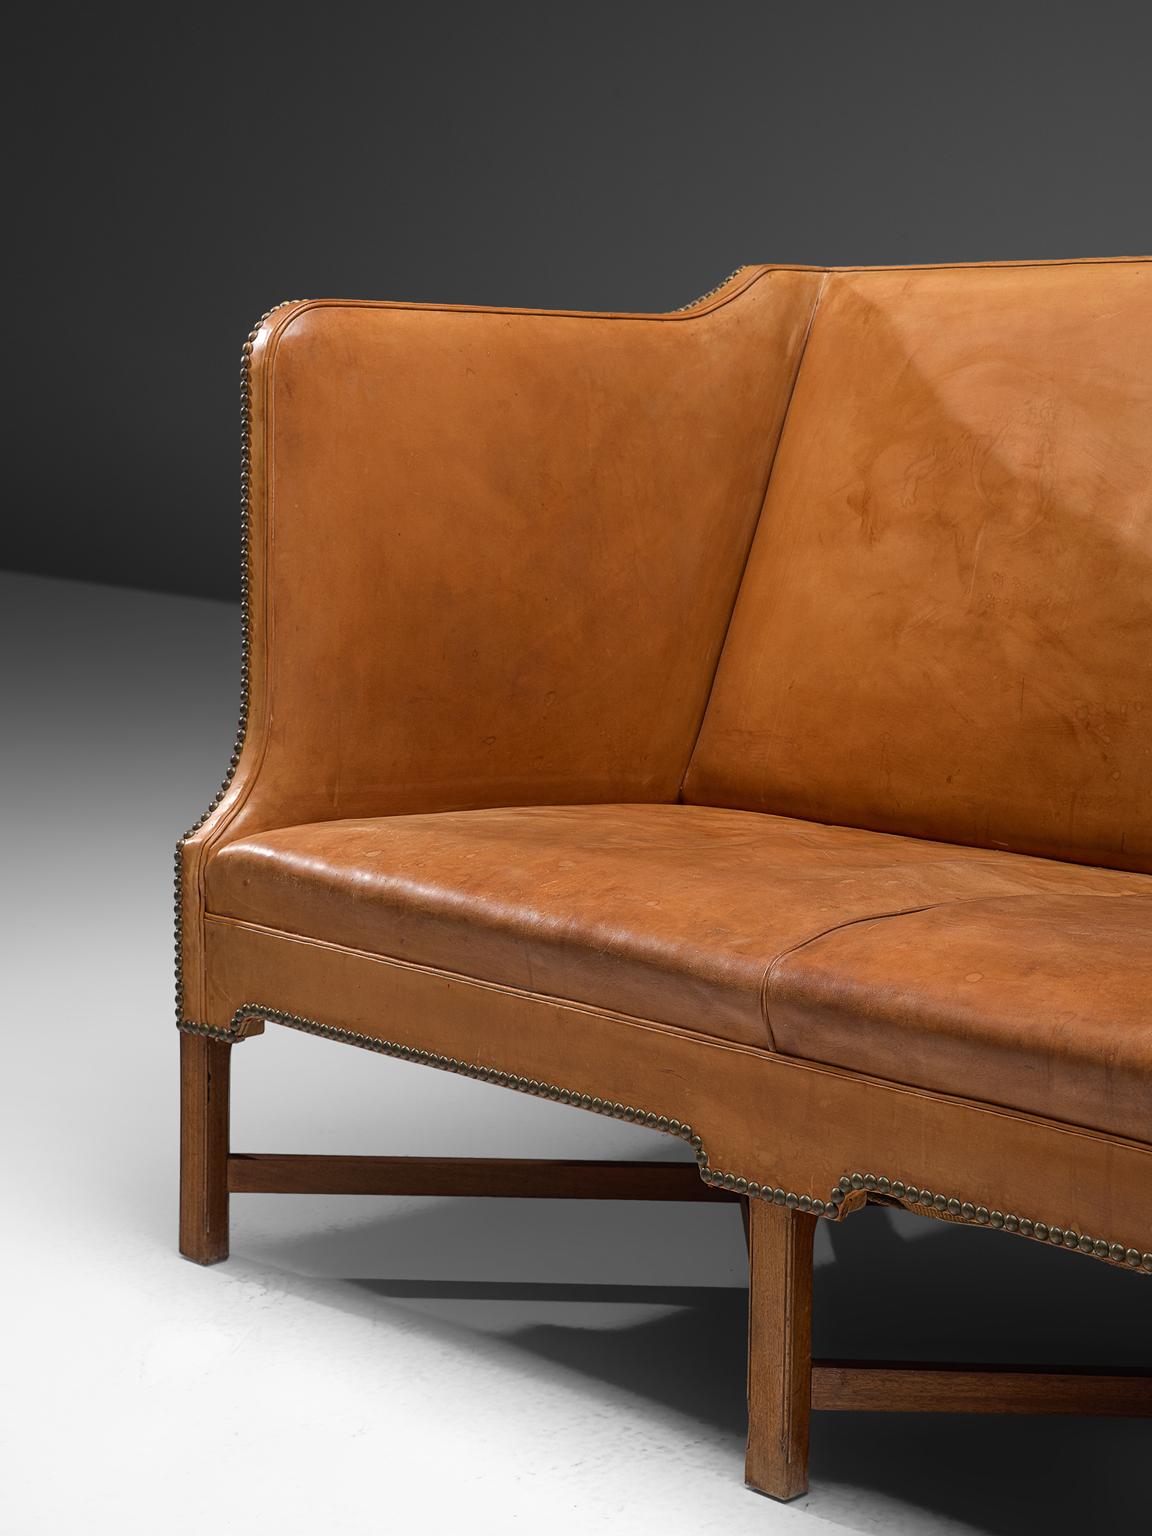 Early 20th Century Kaare Klint Sofa Model 4118 in Mahogany and Original Cognac Leather